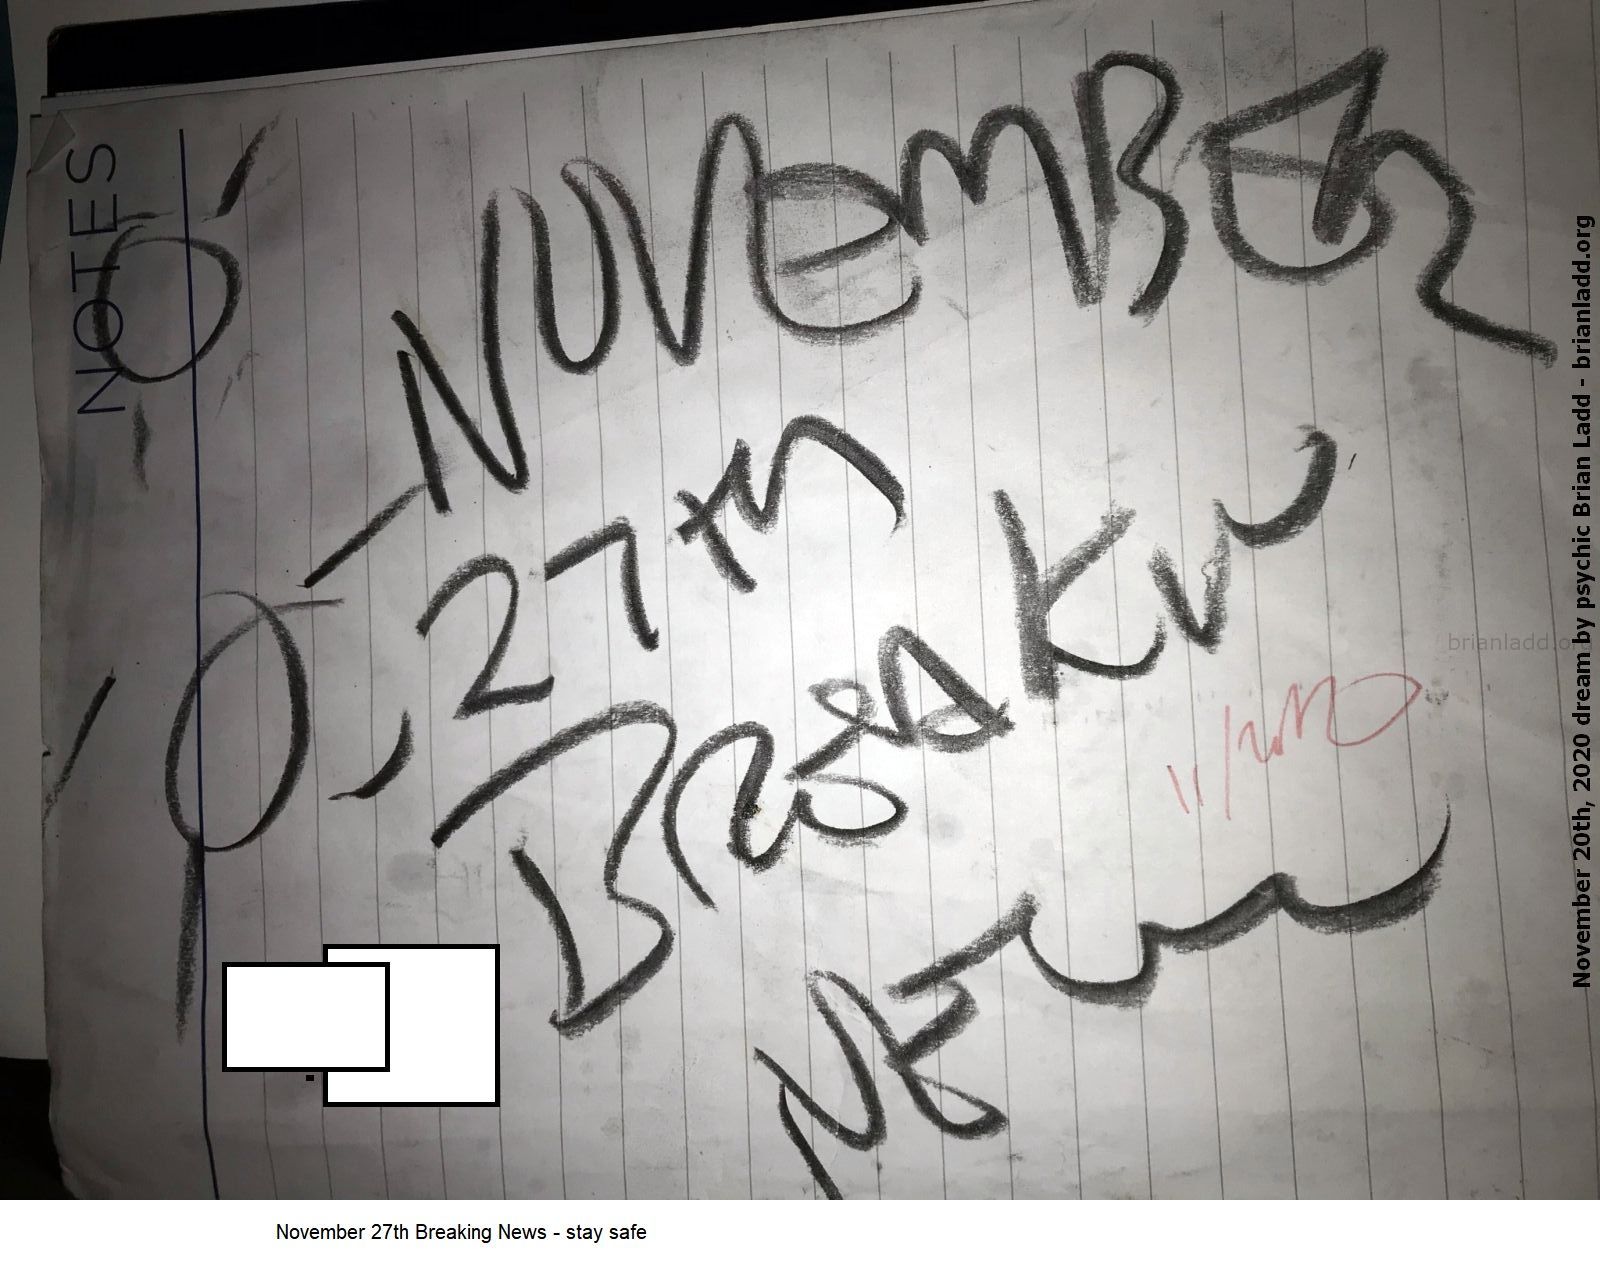 14071 20 November 2020 1 - November 27th Breaking News - Stay Safe....
November 27th Breaking News - Stay Safe.
